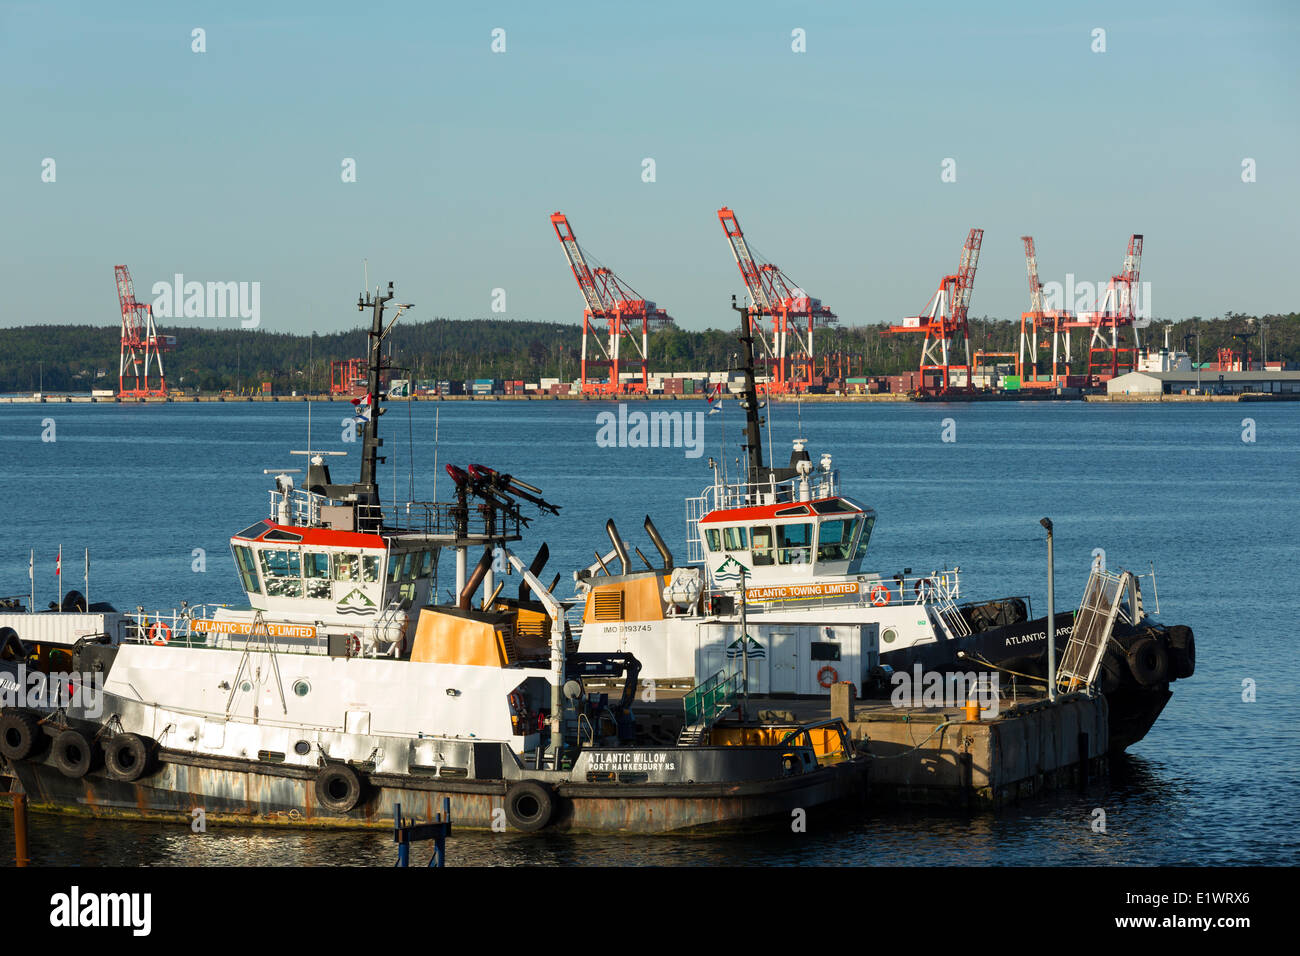 Tugboats docked at wharf, Woodside, Dartmouth, Nova Scotia, Canada Stock Photo